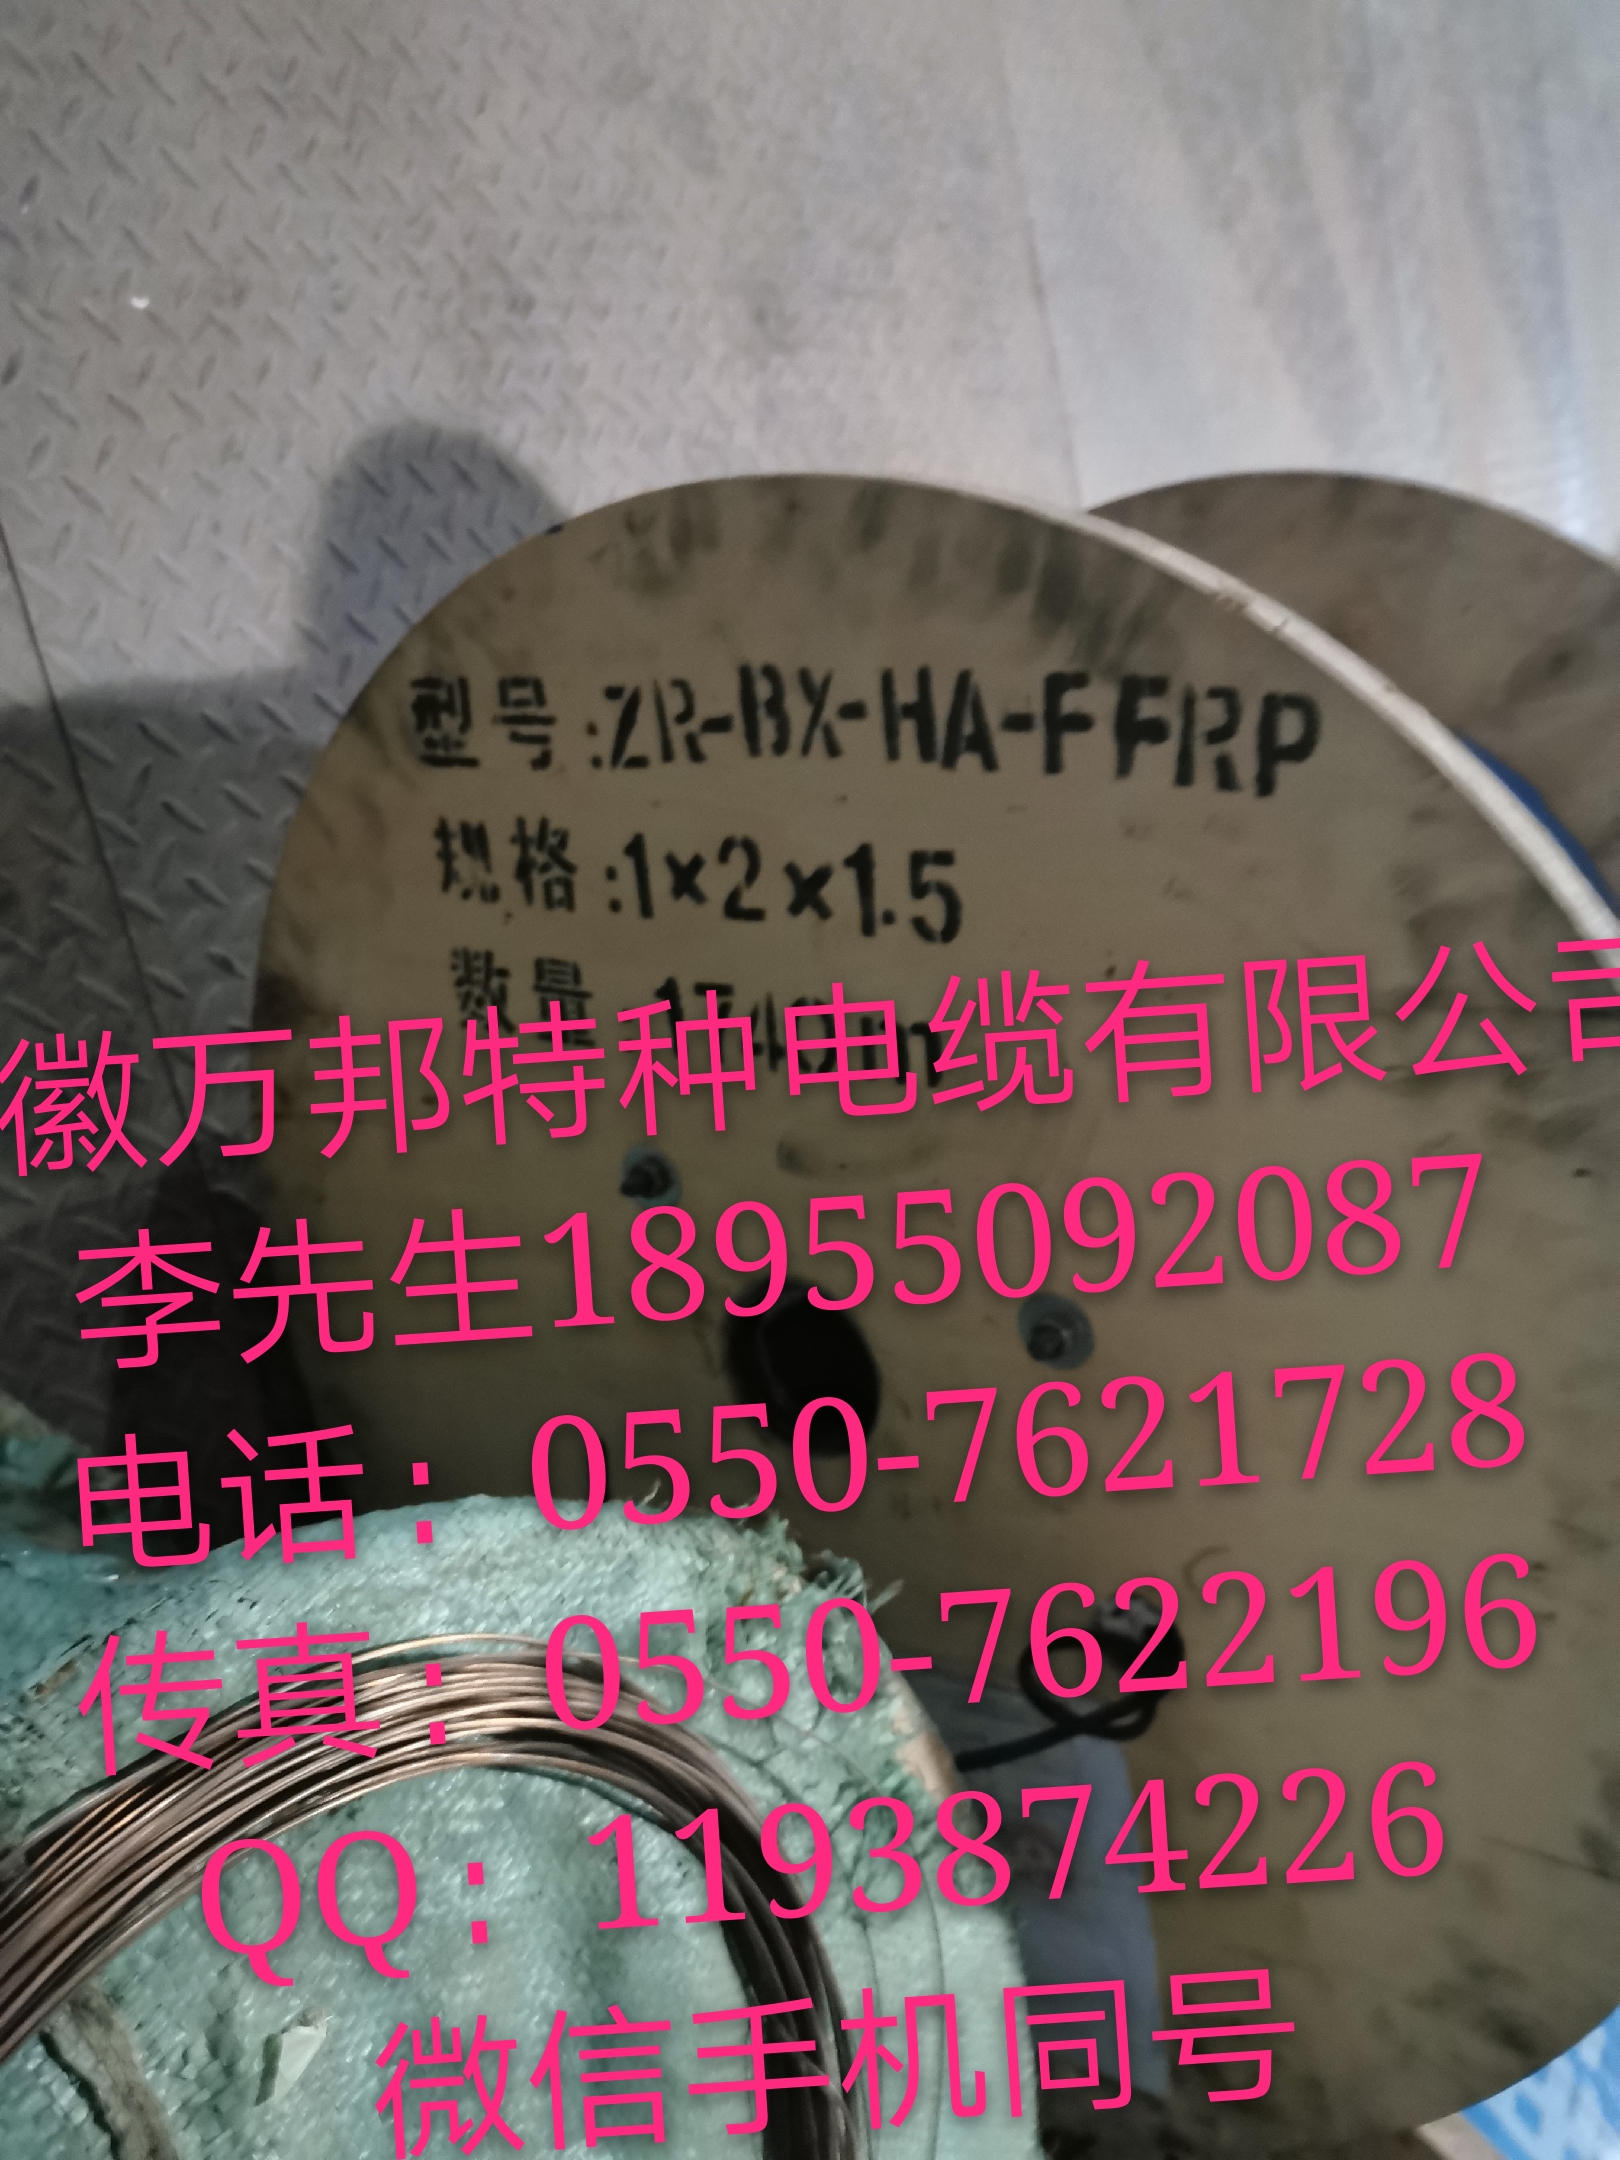 ZR-BX-HA-FFRP  安徽万邦特种电缆有限公司